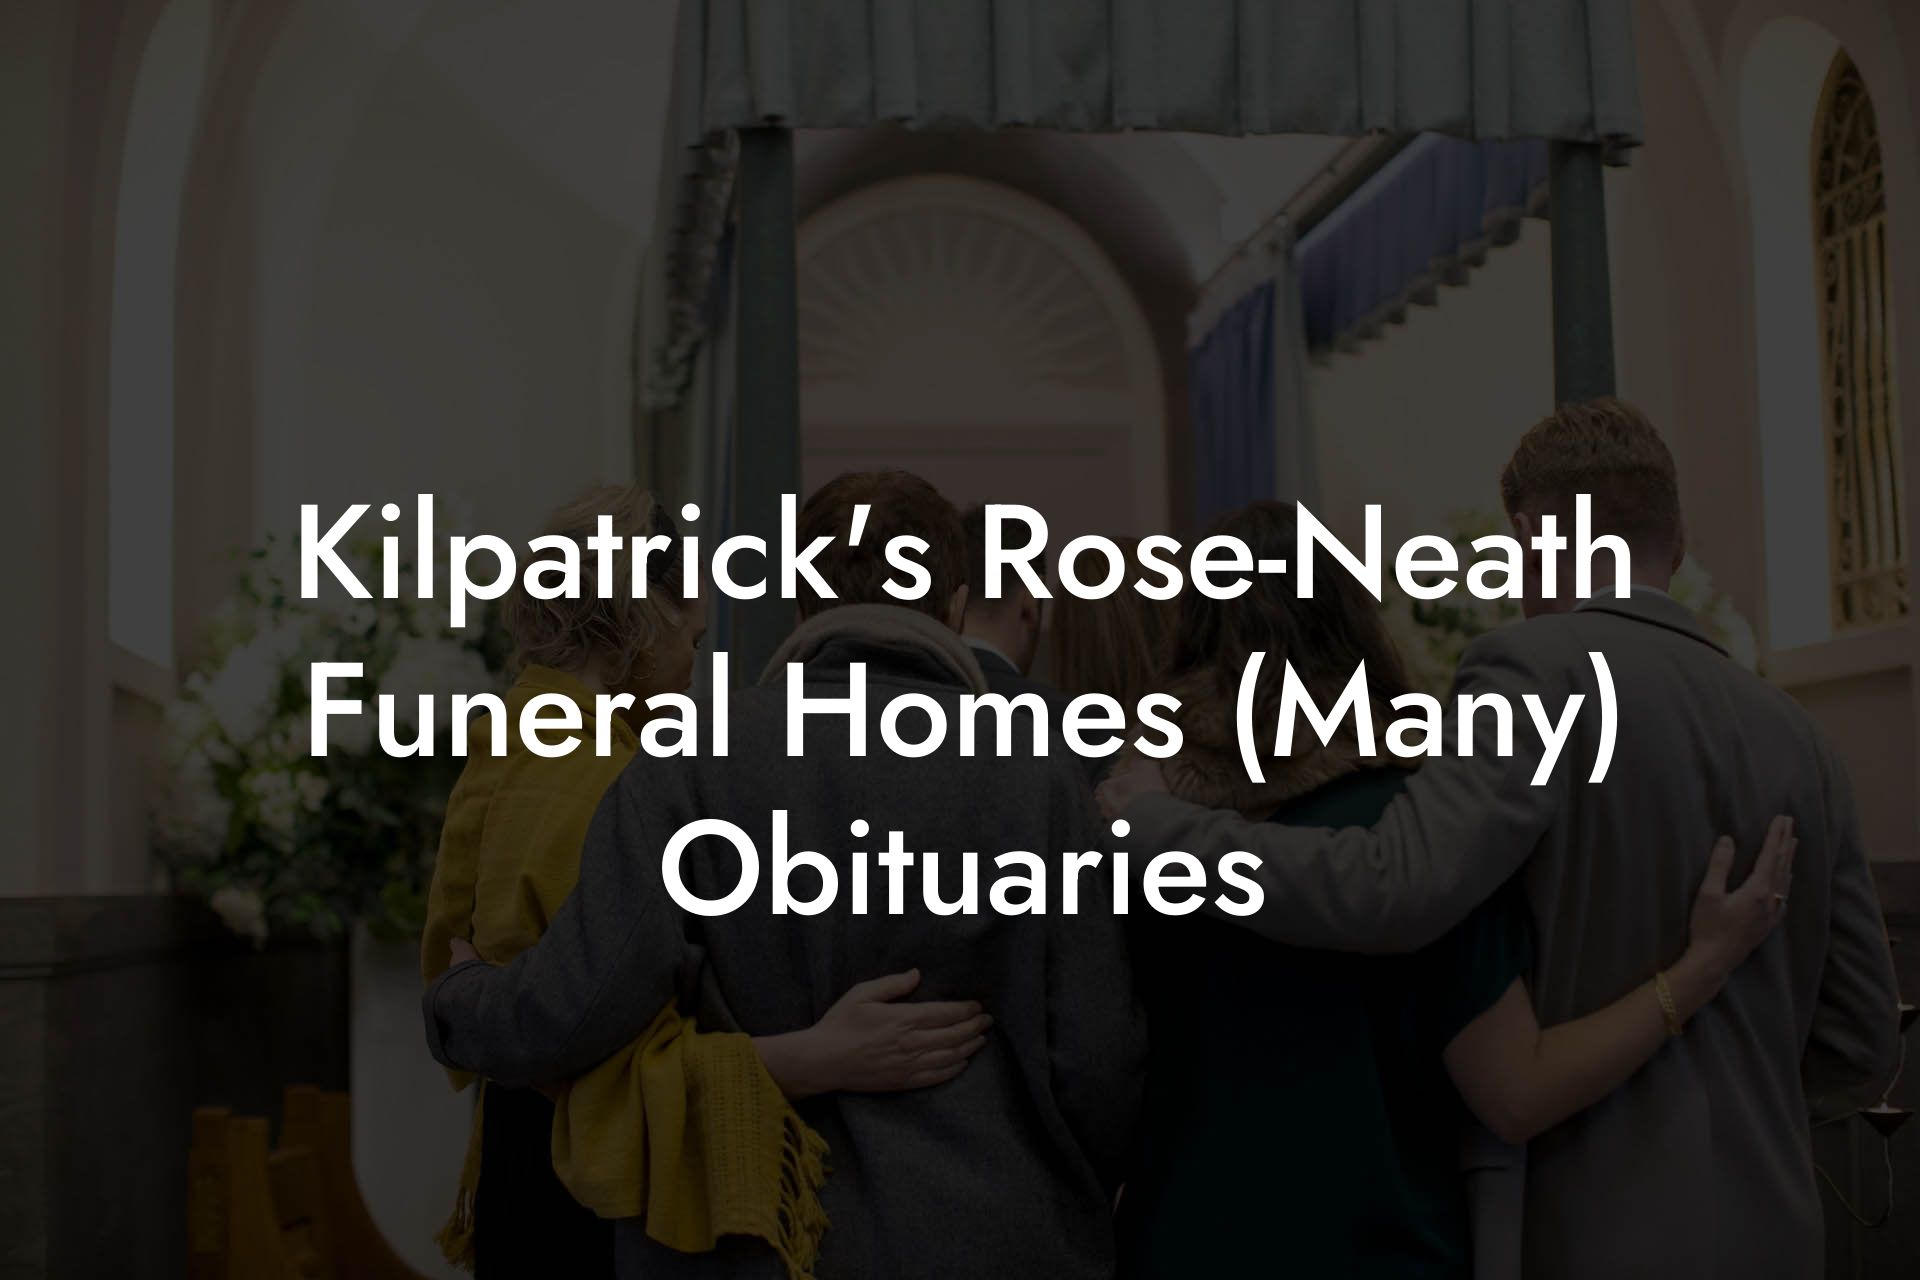 Kilpatrick's Rose-Neath Funeral Homes (Many) Obituaries